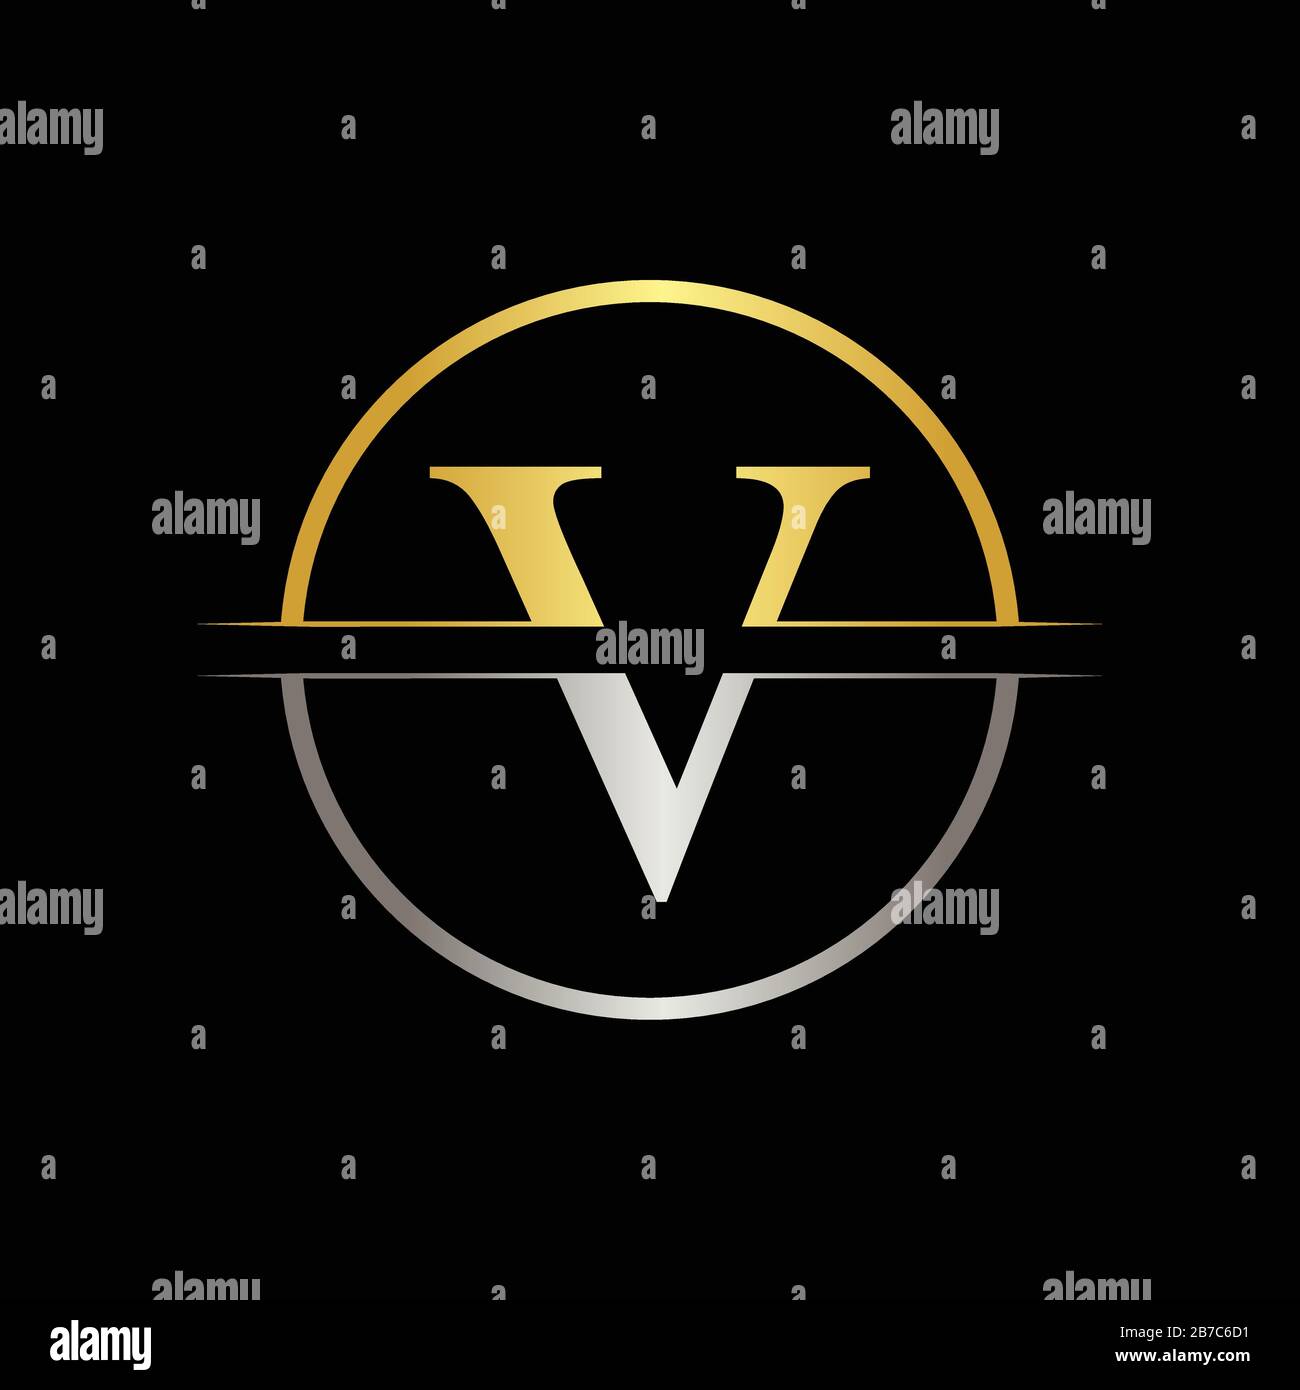 Initial Letter V Logo Design Business Vector Template. Creative Abstract Letter V Logo Vector Stock Vector